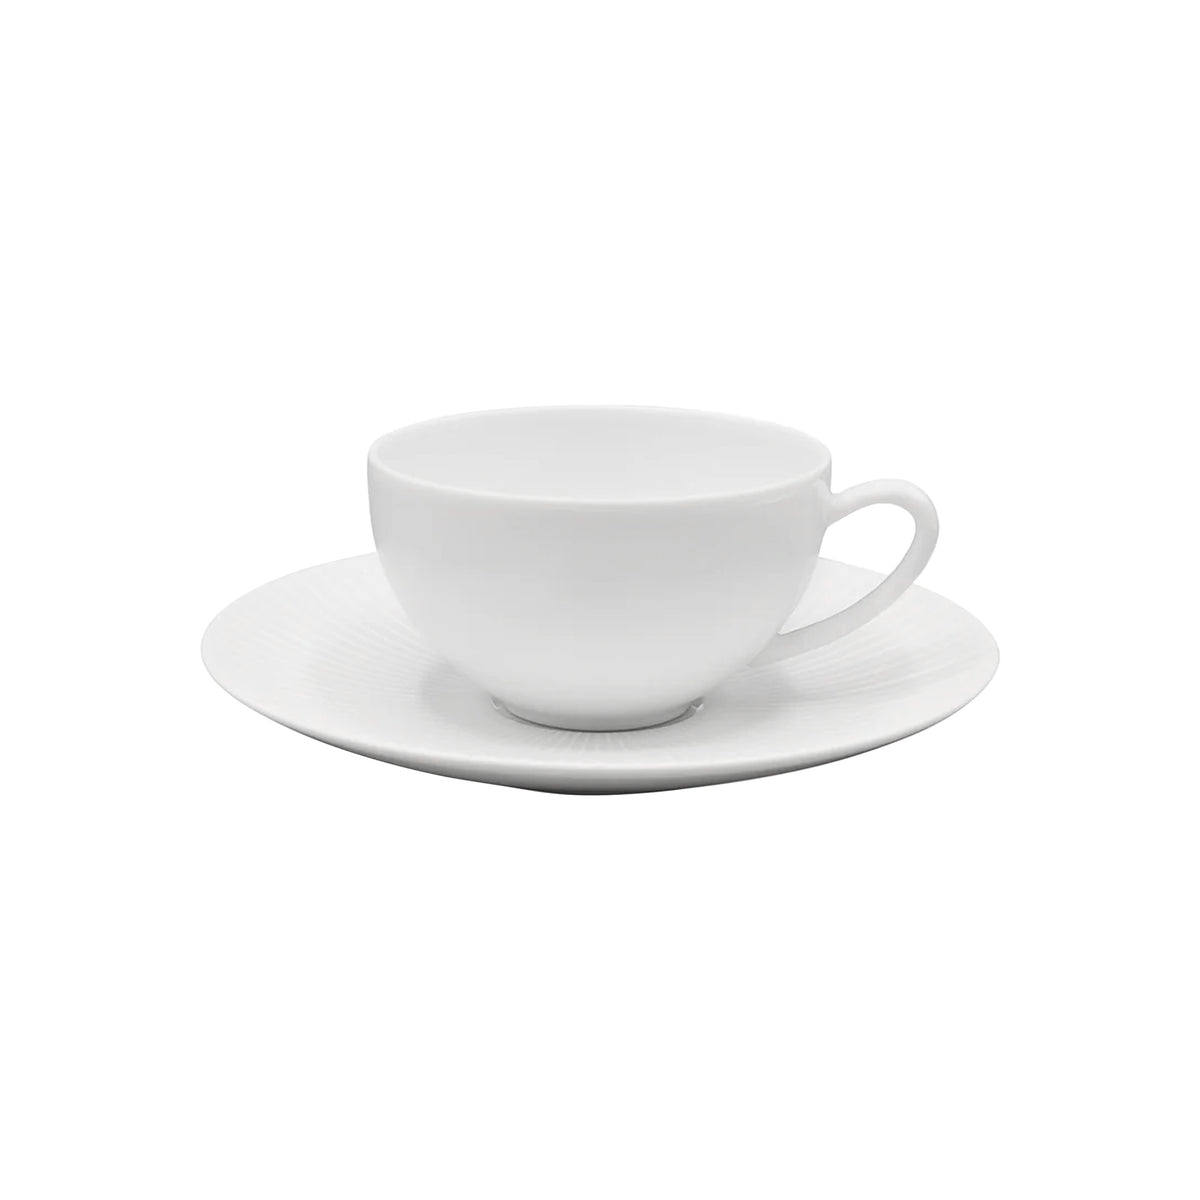 BOLERO White satin - Tea cup